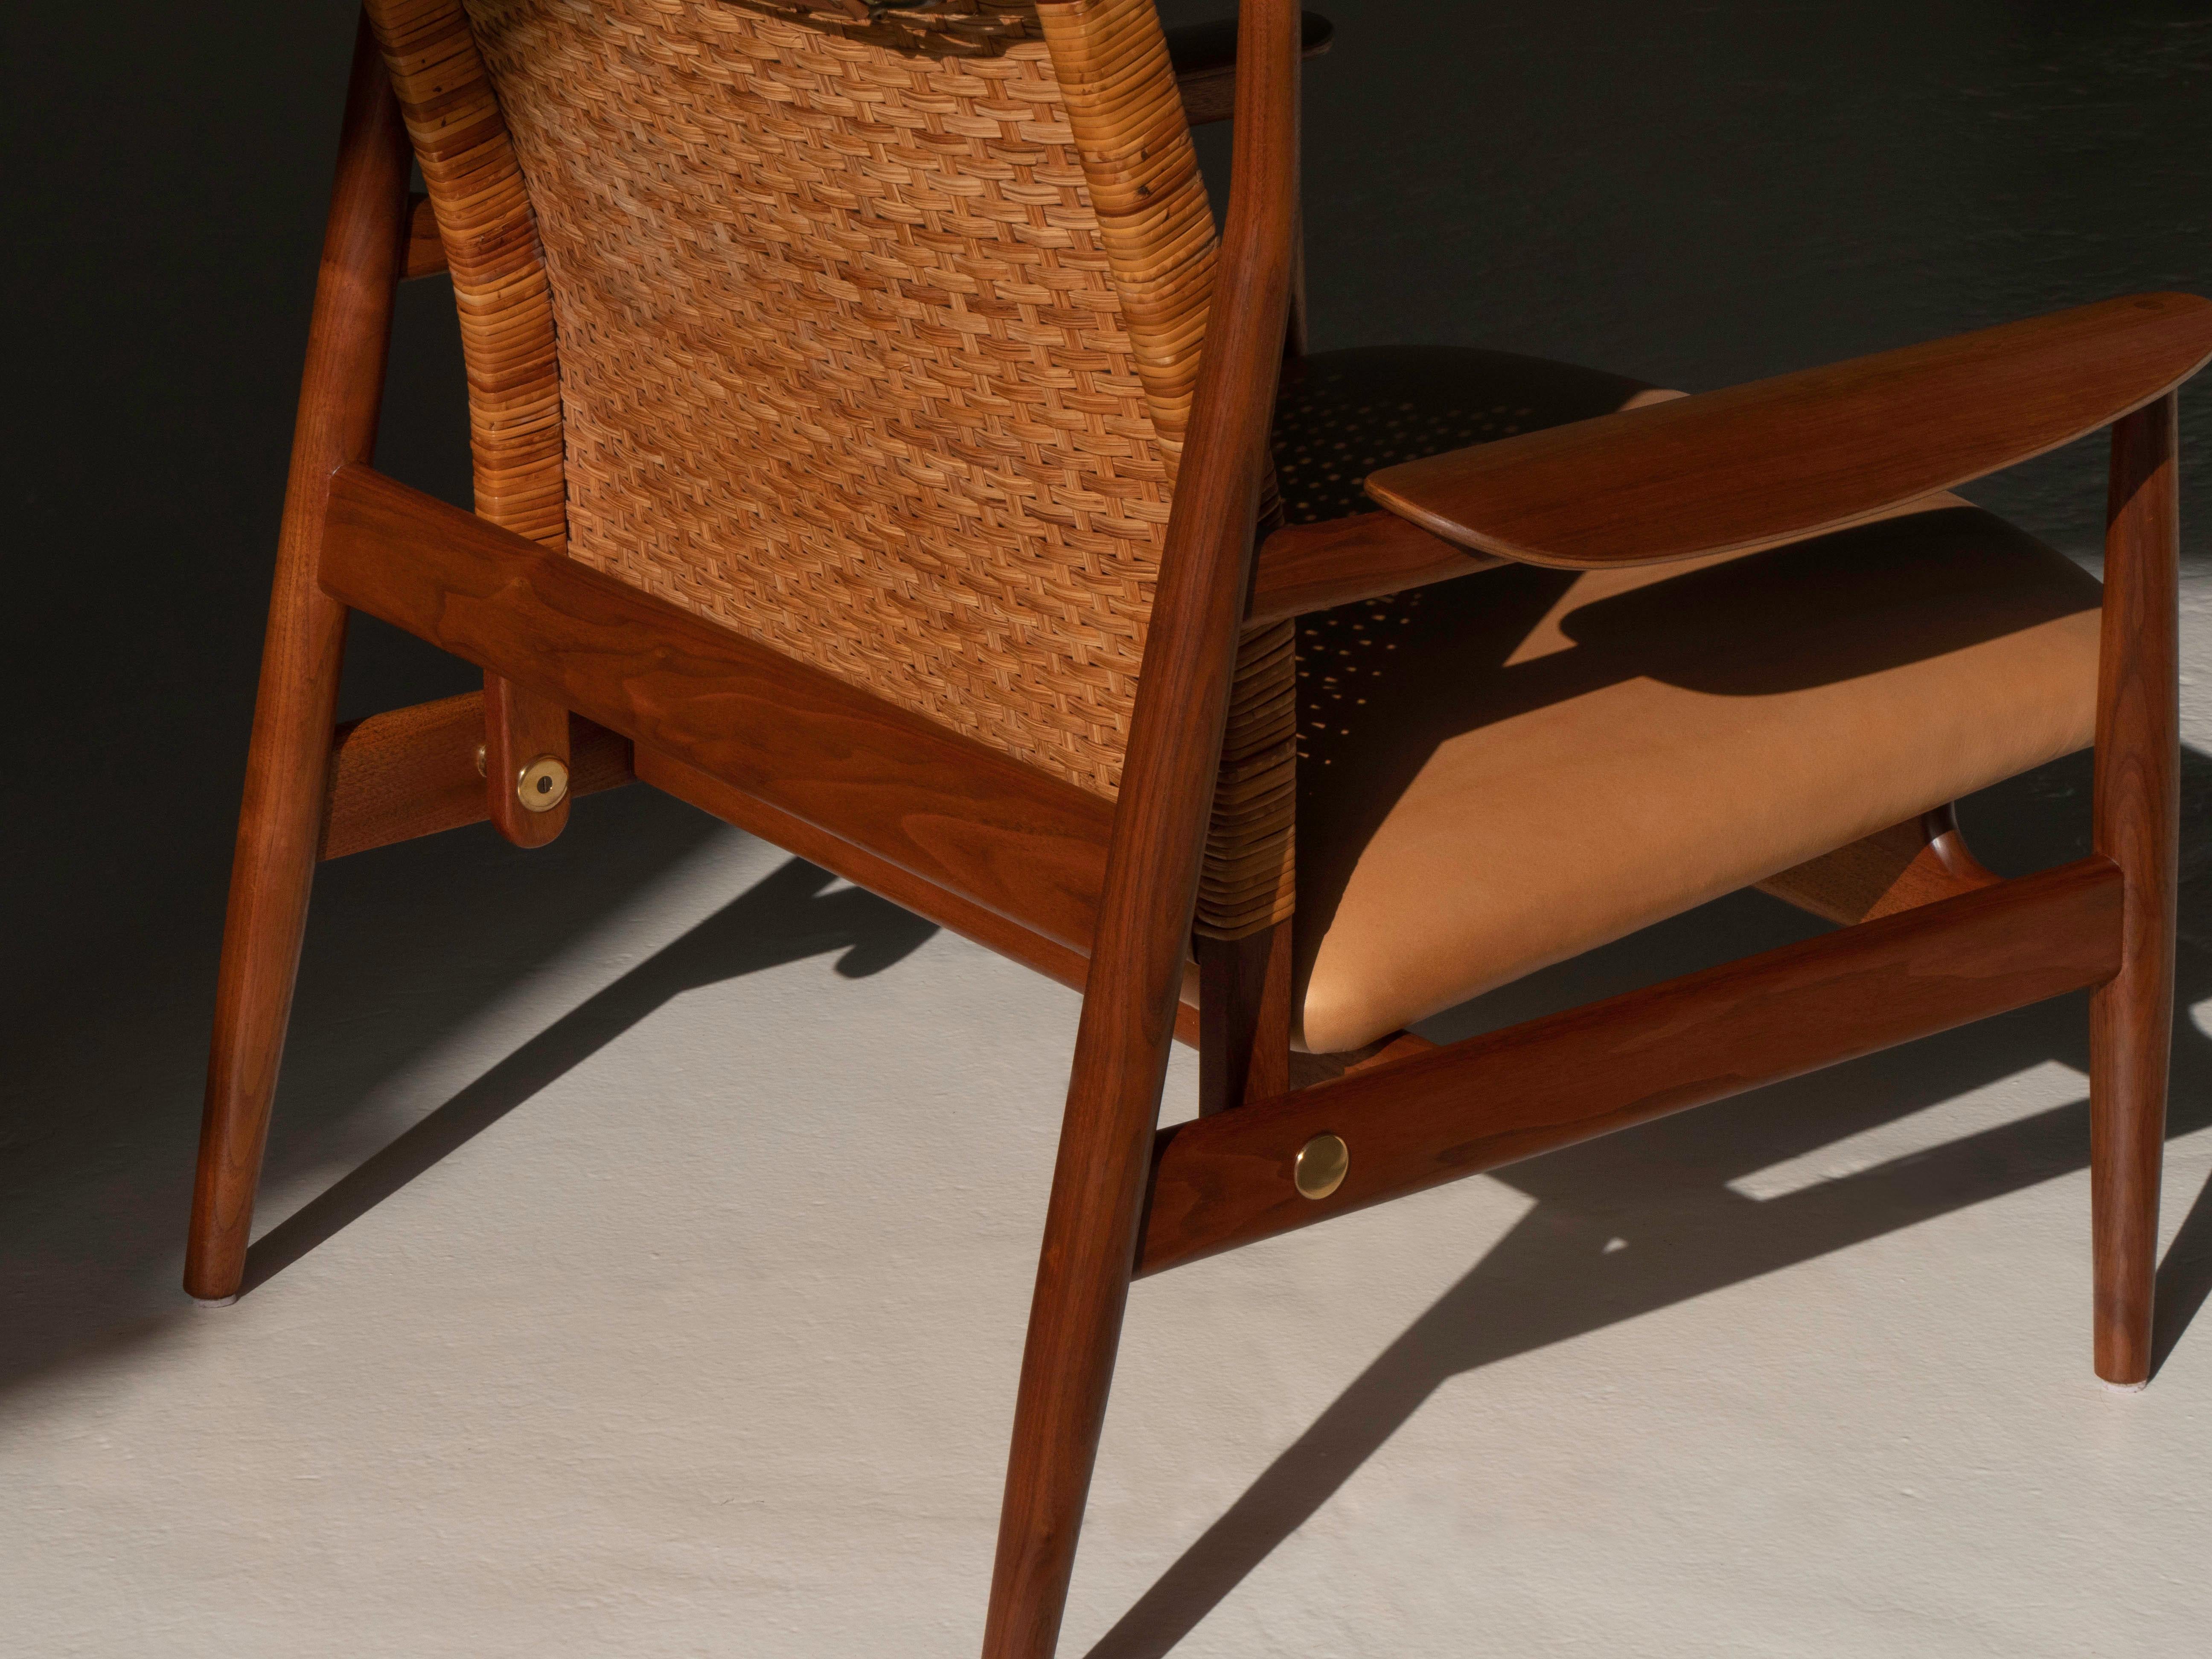 Leather Finn Juhl FJ55 Cane Back Reclining Chair in Walnut for Baker Furniture, 1950's For Sale